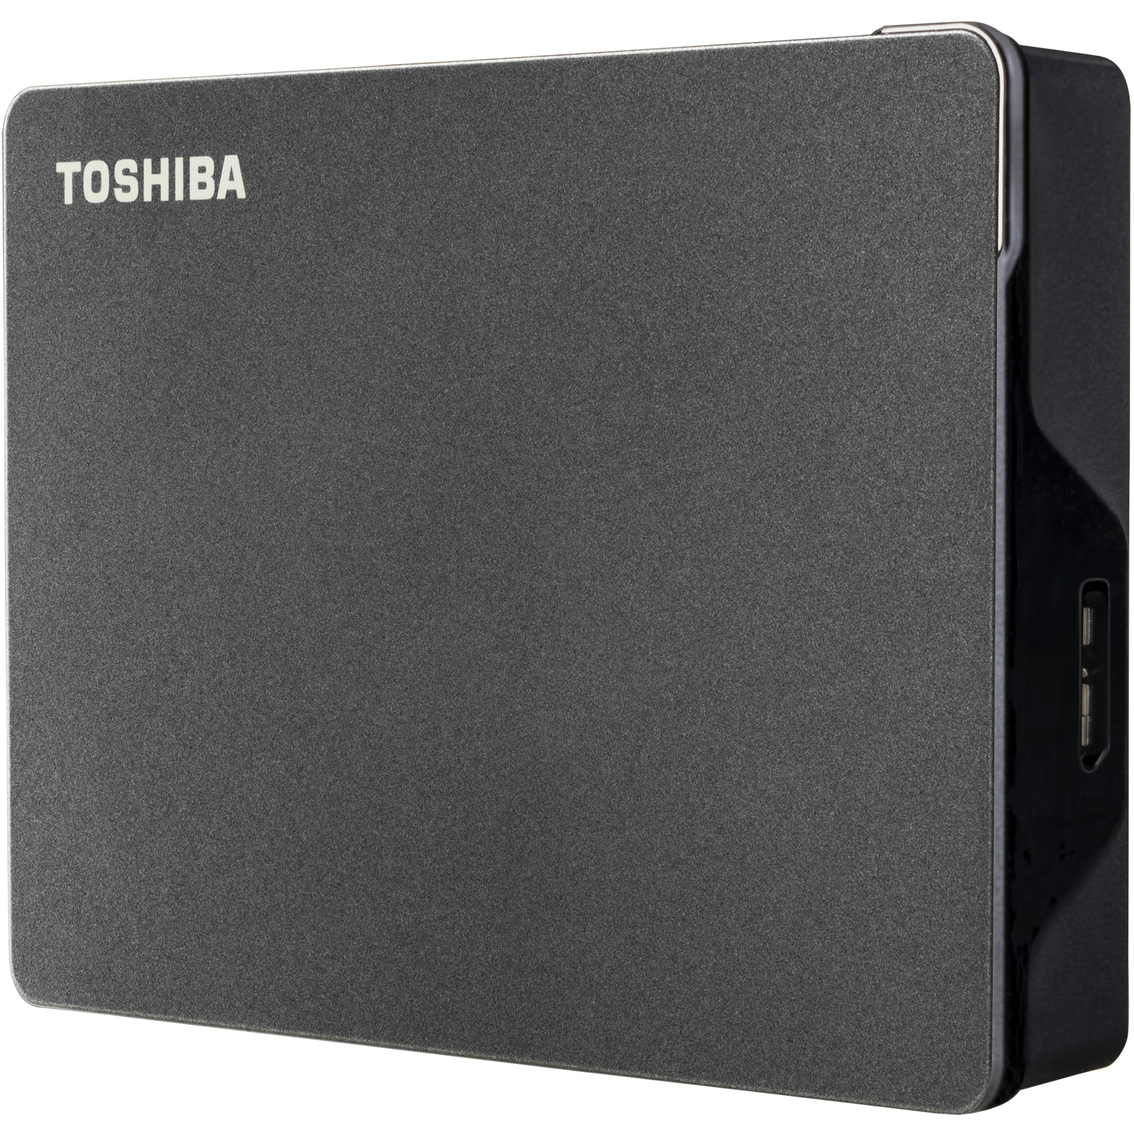 Toshiba Canvio External Gaming 2TB Hard Drive - Image 2 of 5